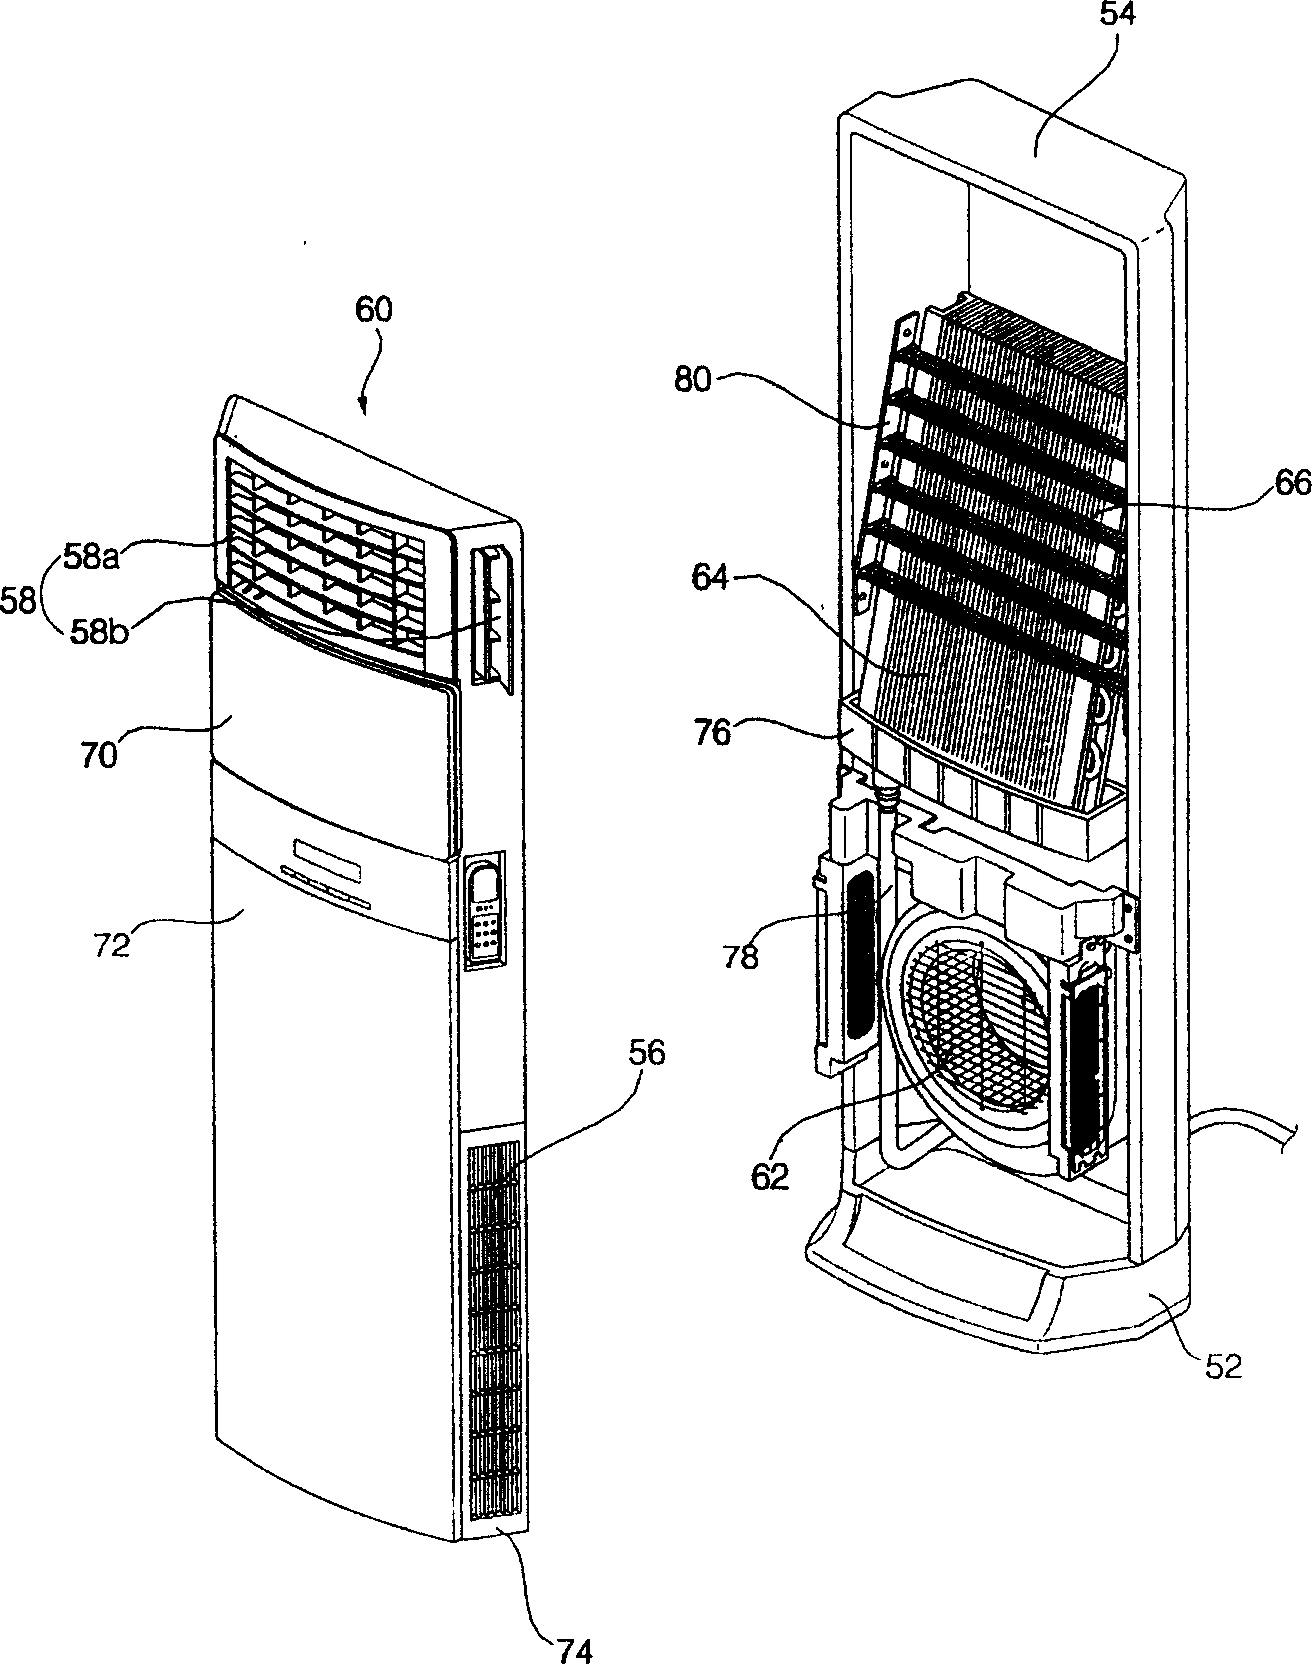 Air-conditioner heating rod configuration arrangement